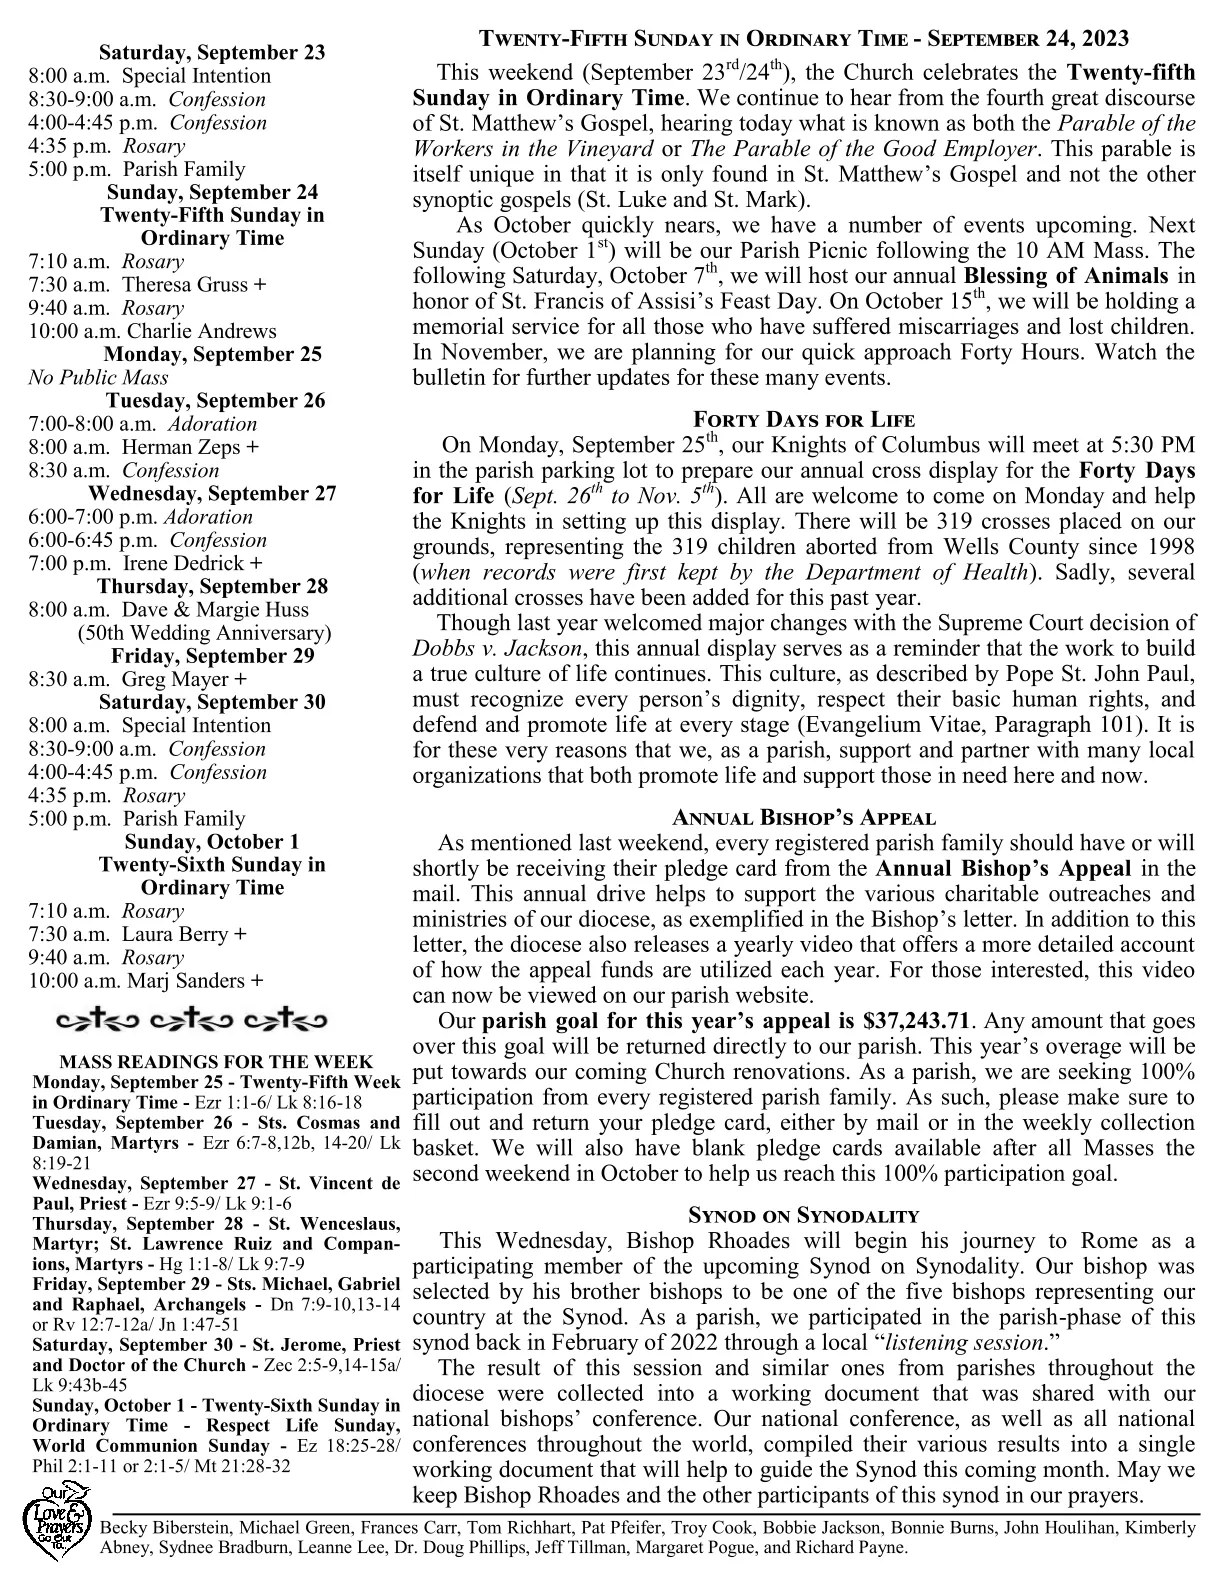 Sep 24, 2023 - Bulletin - Page 2